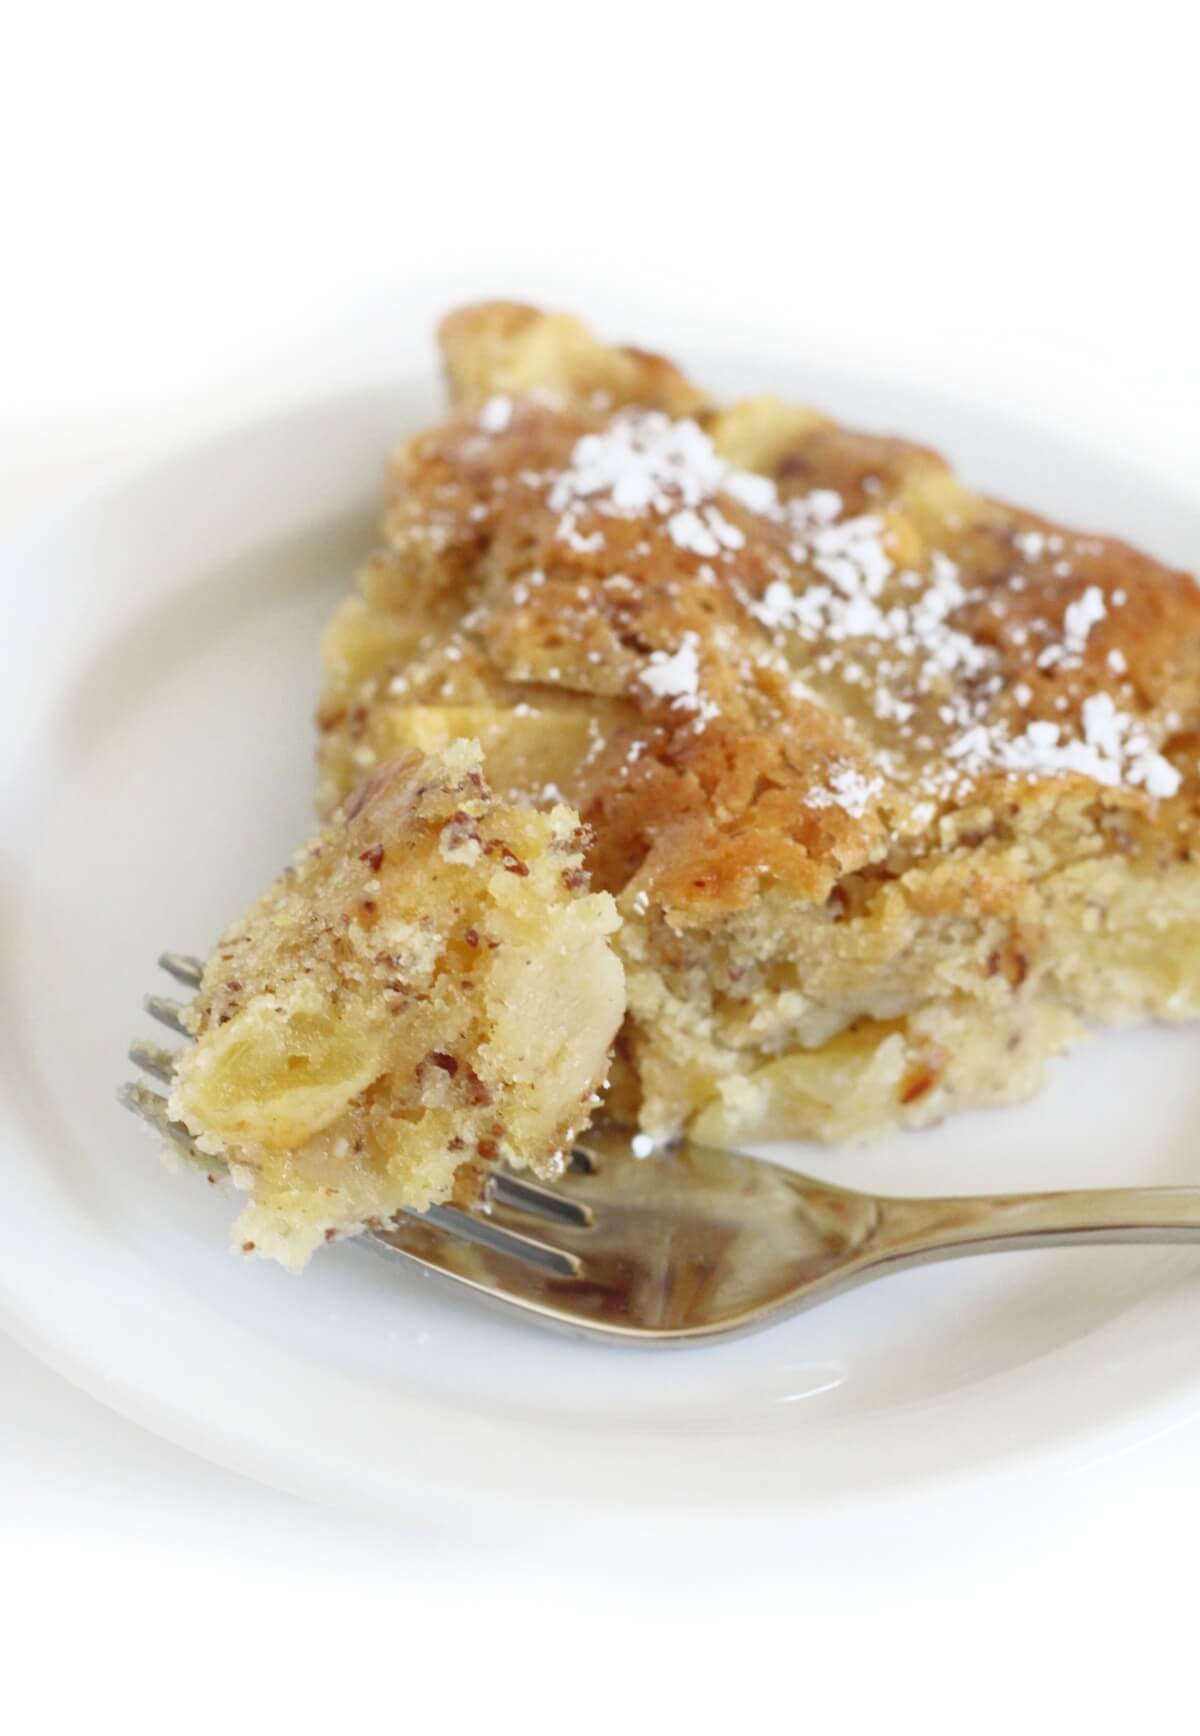 forkful of gluten-free french apple cake slice